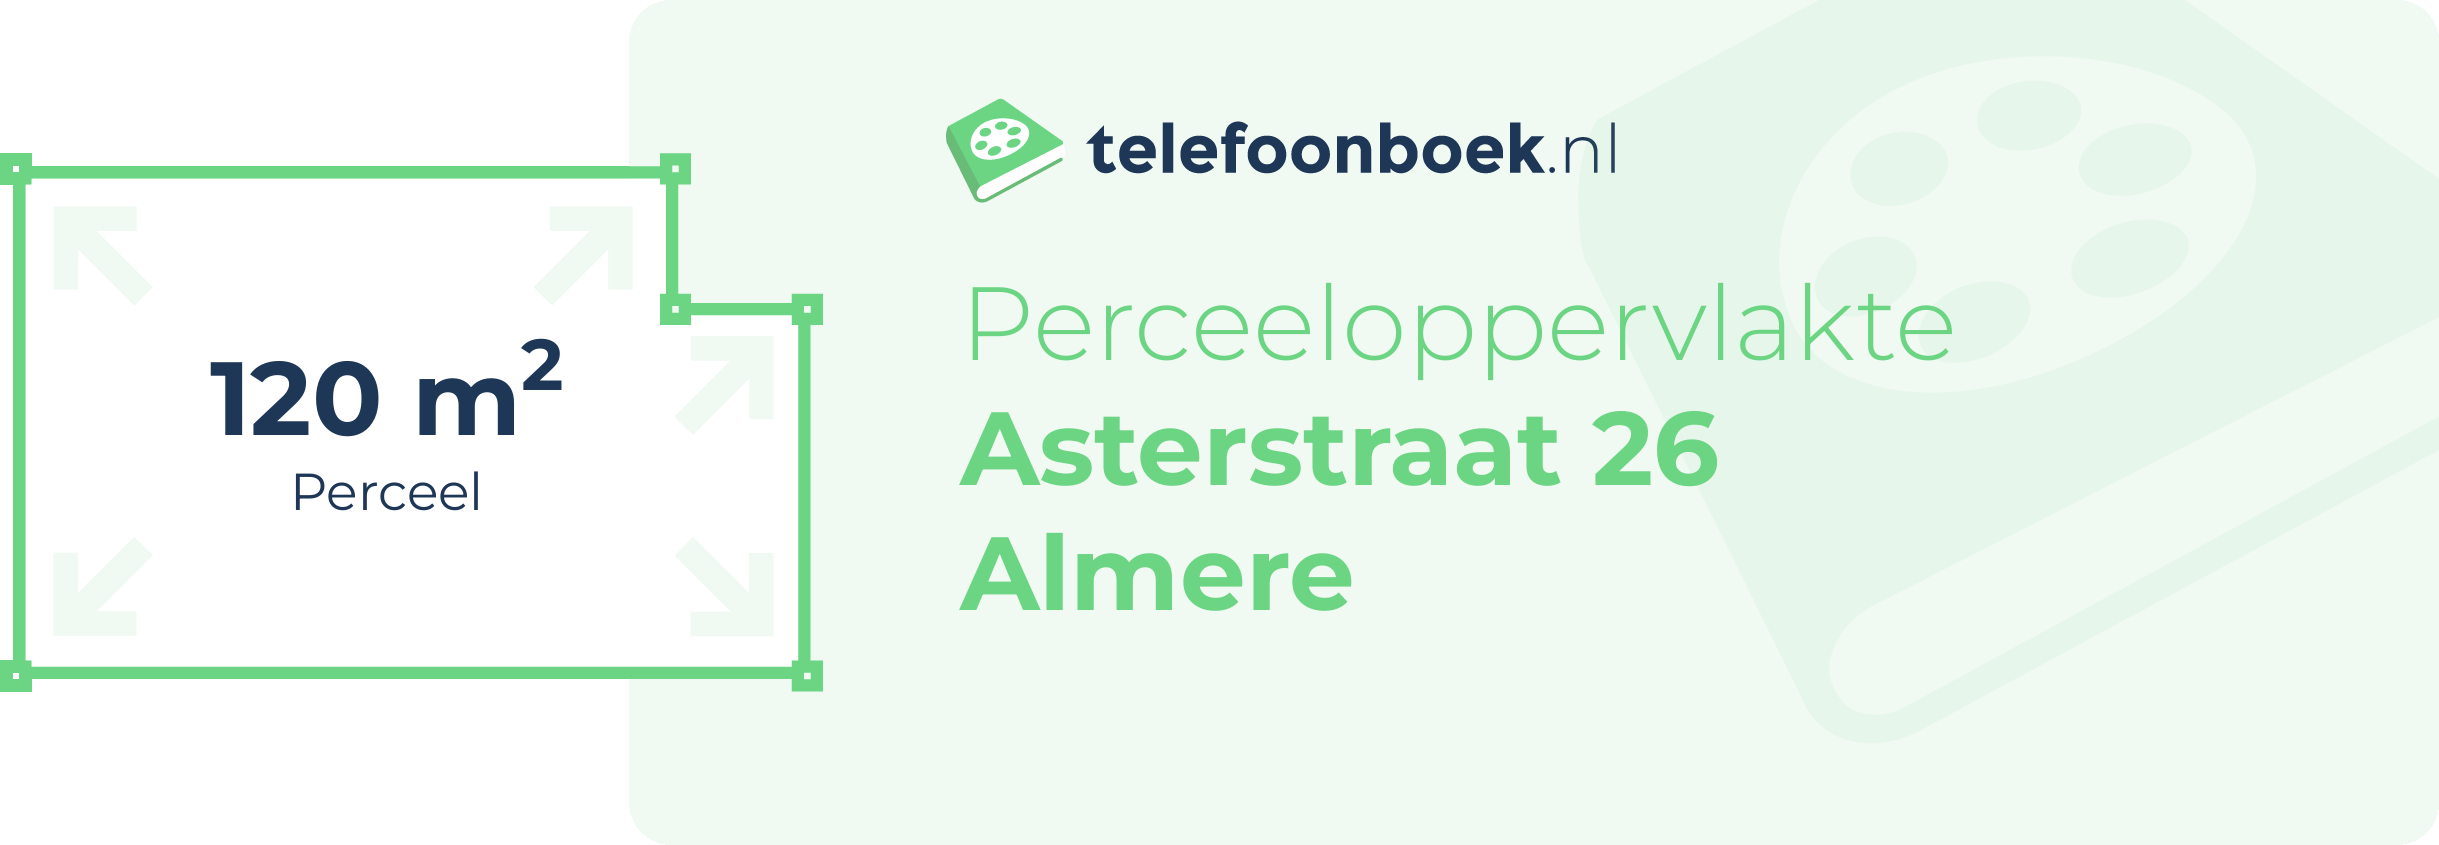 Perceeloppervlakte Asterstraat 26 Almere